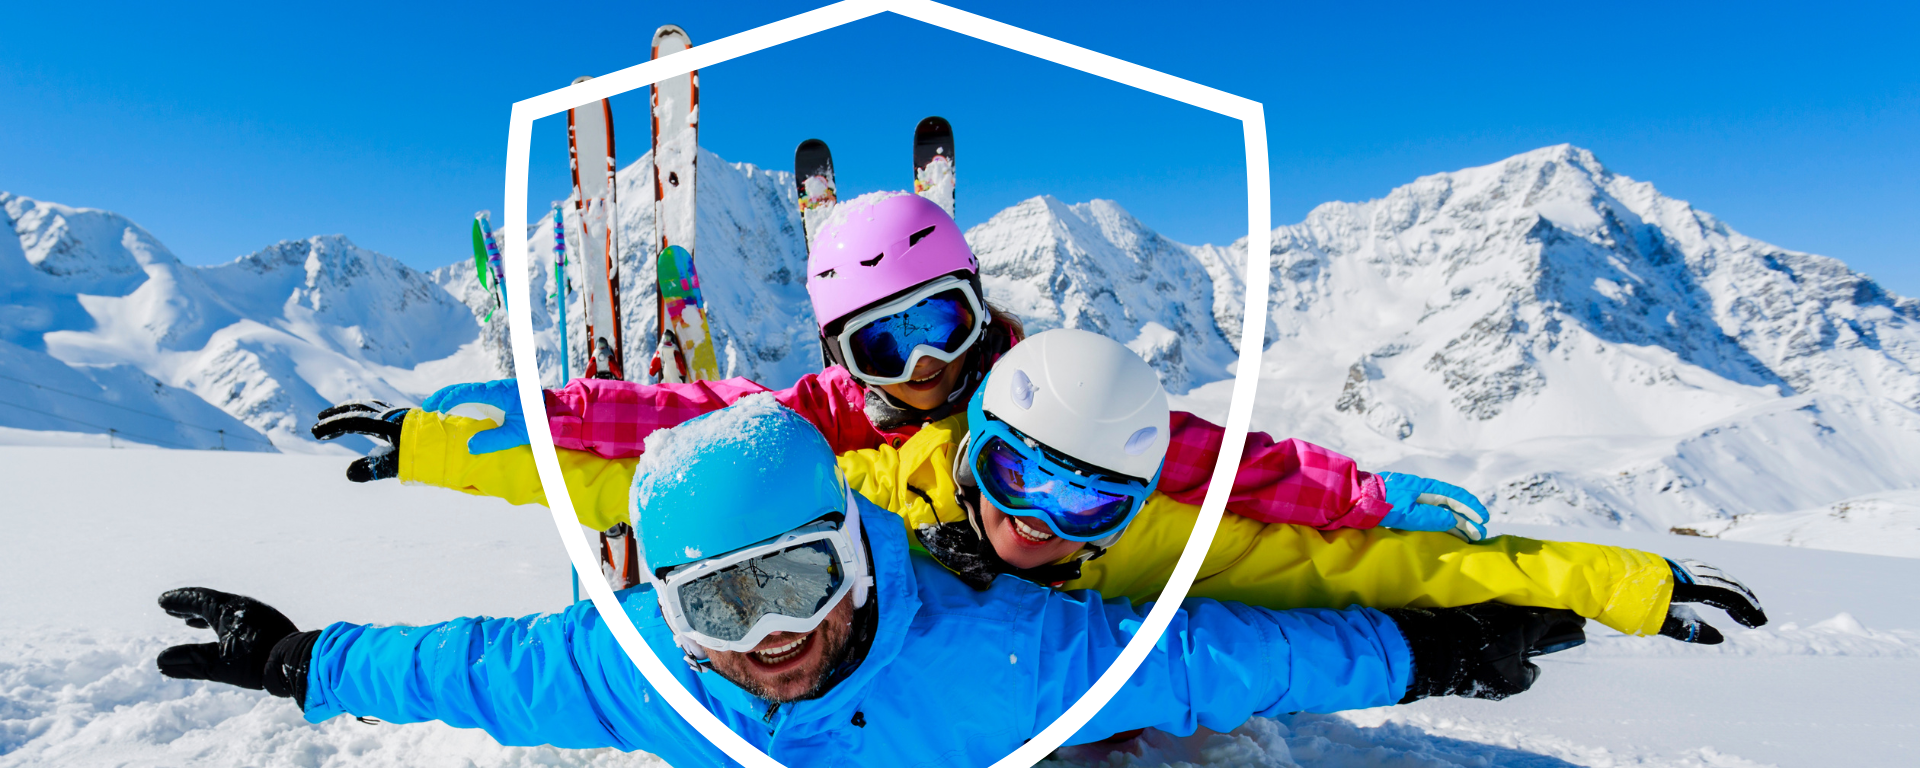 Best Ski Travel Insurance - Feature Image